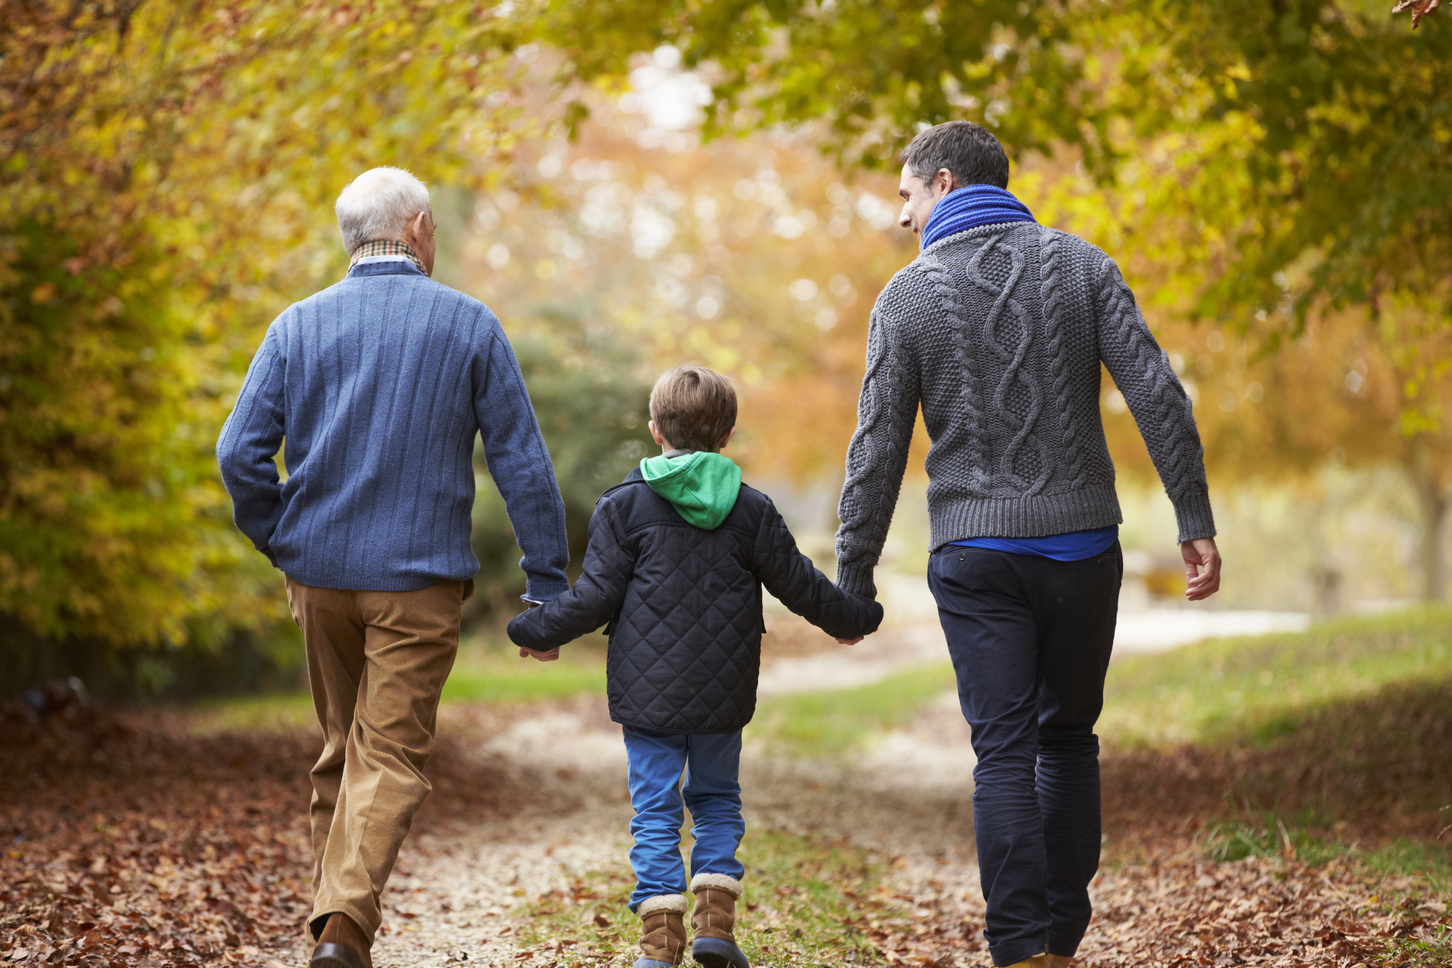 Multigenerational family walking on a path